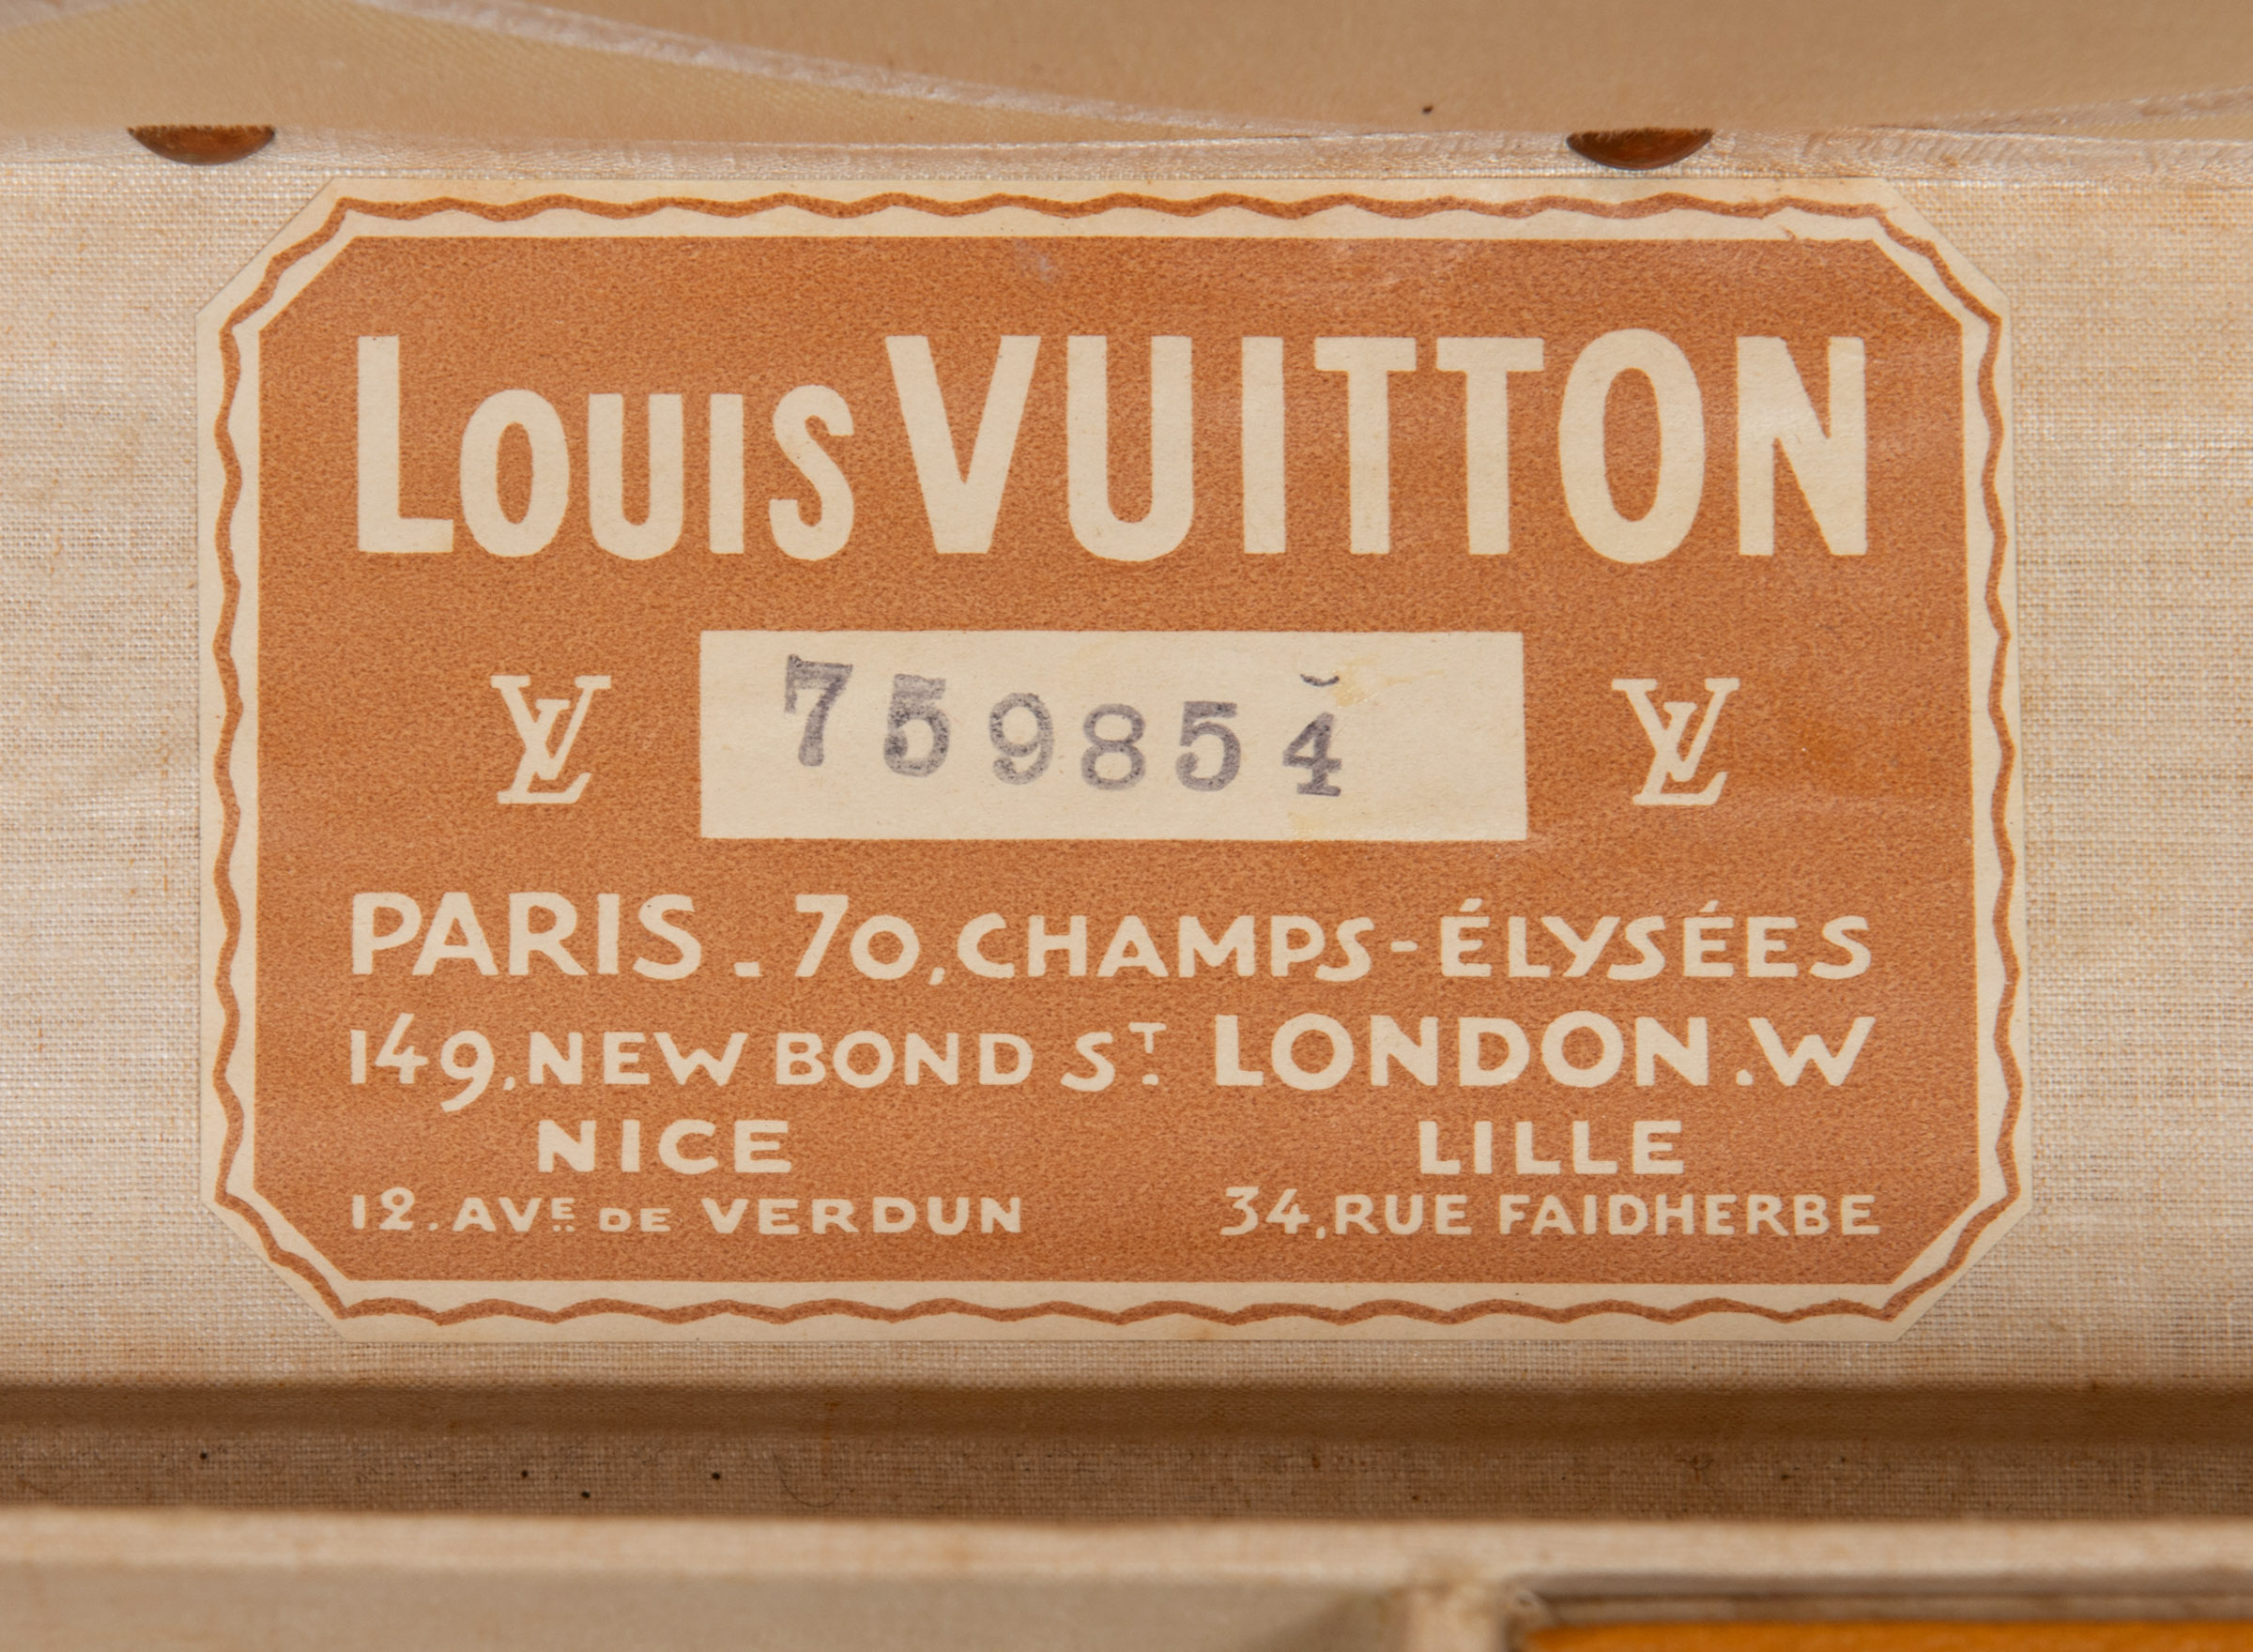 Vintage Louis Vuitton luggage label